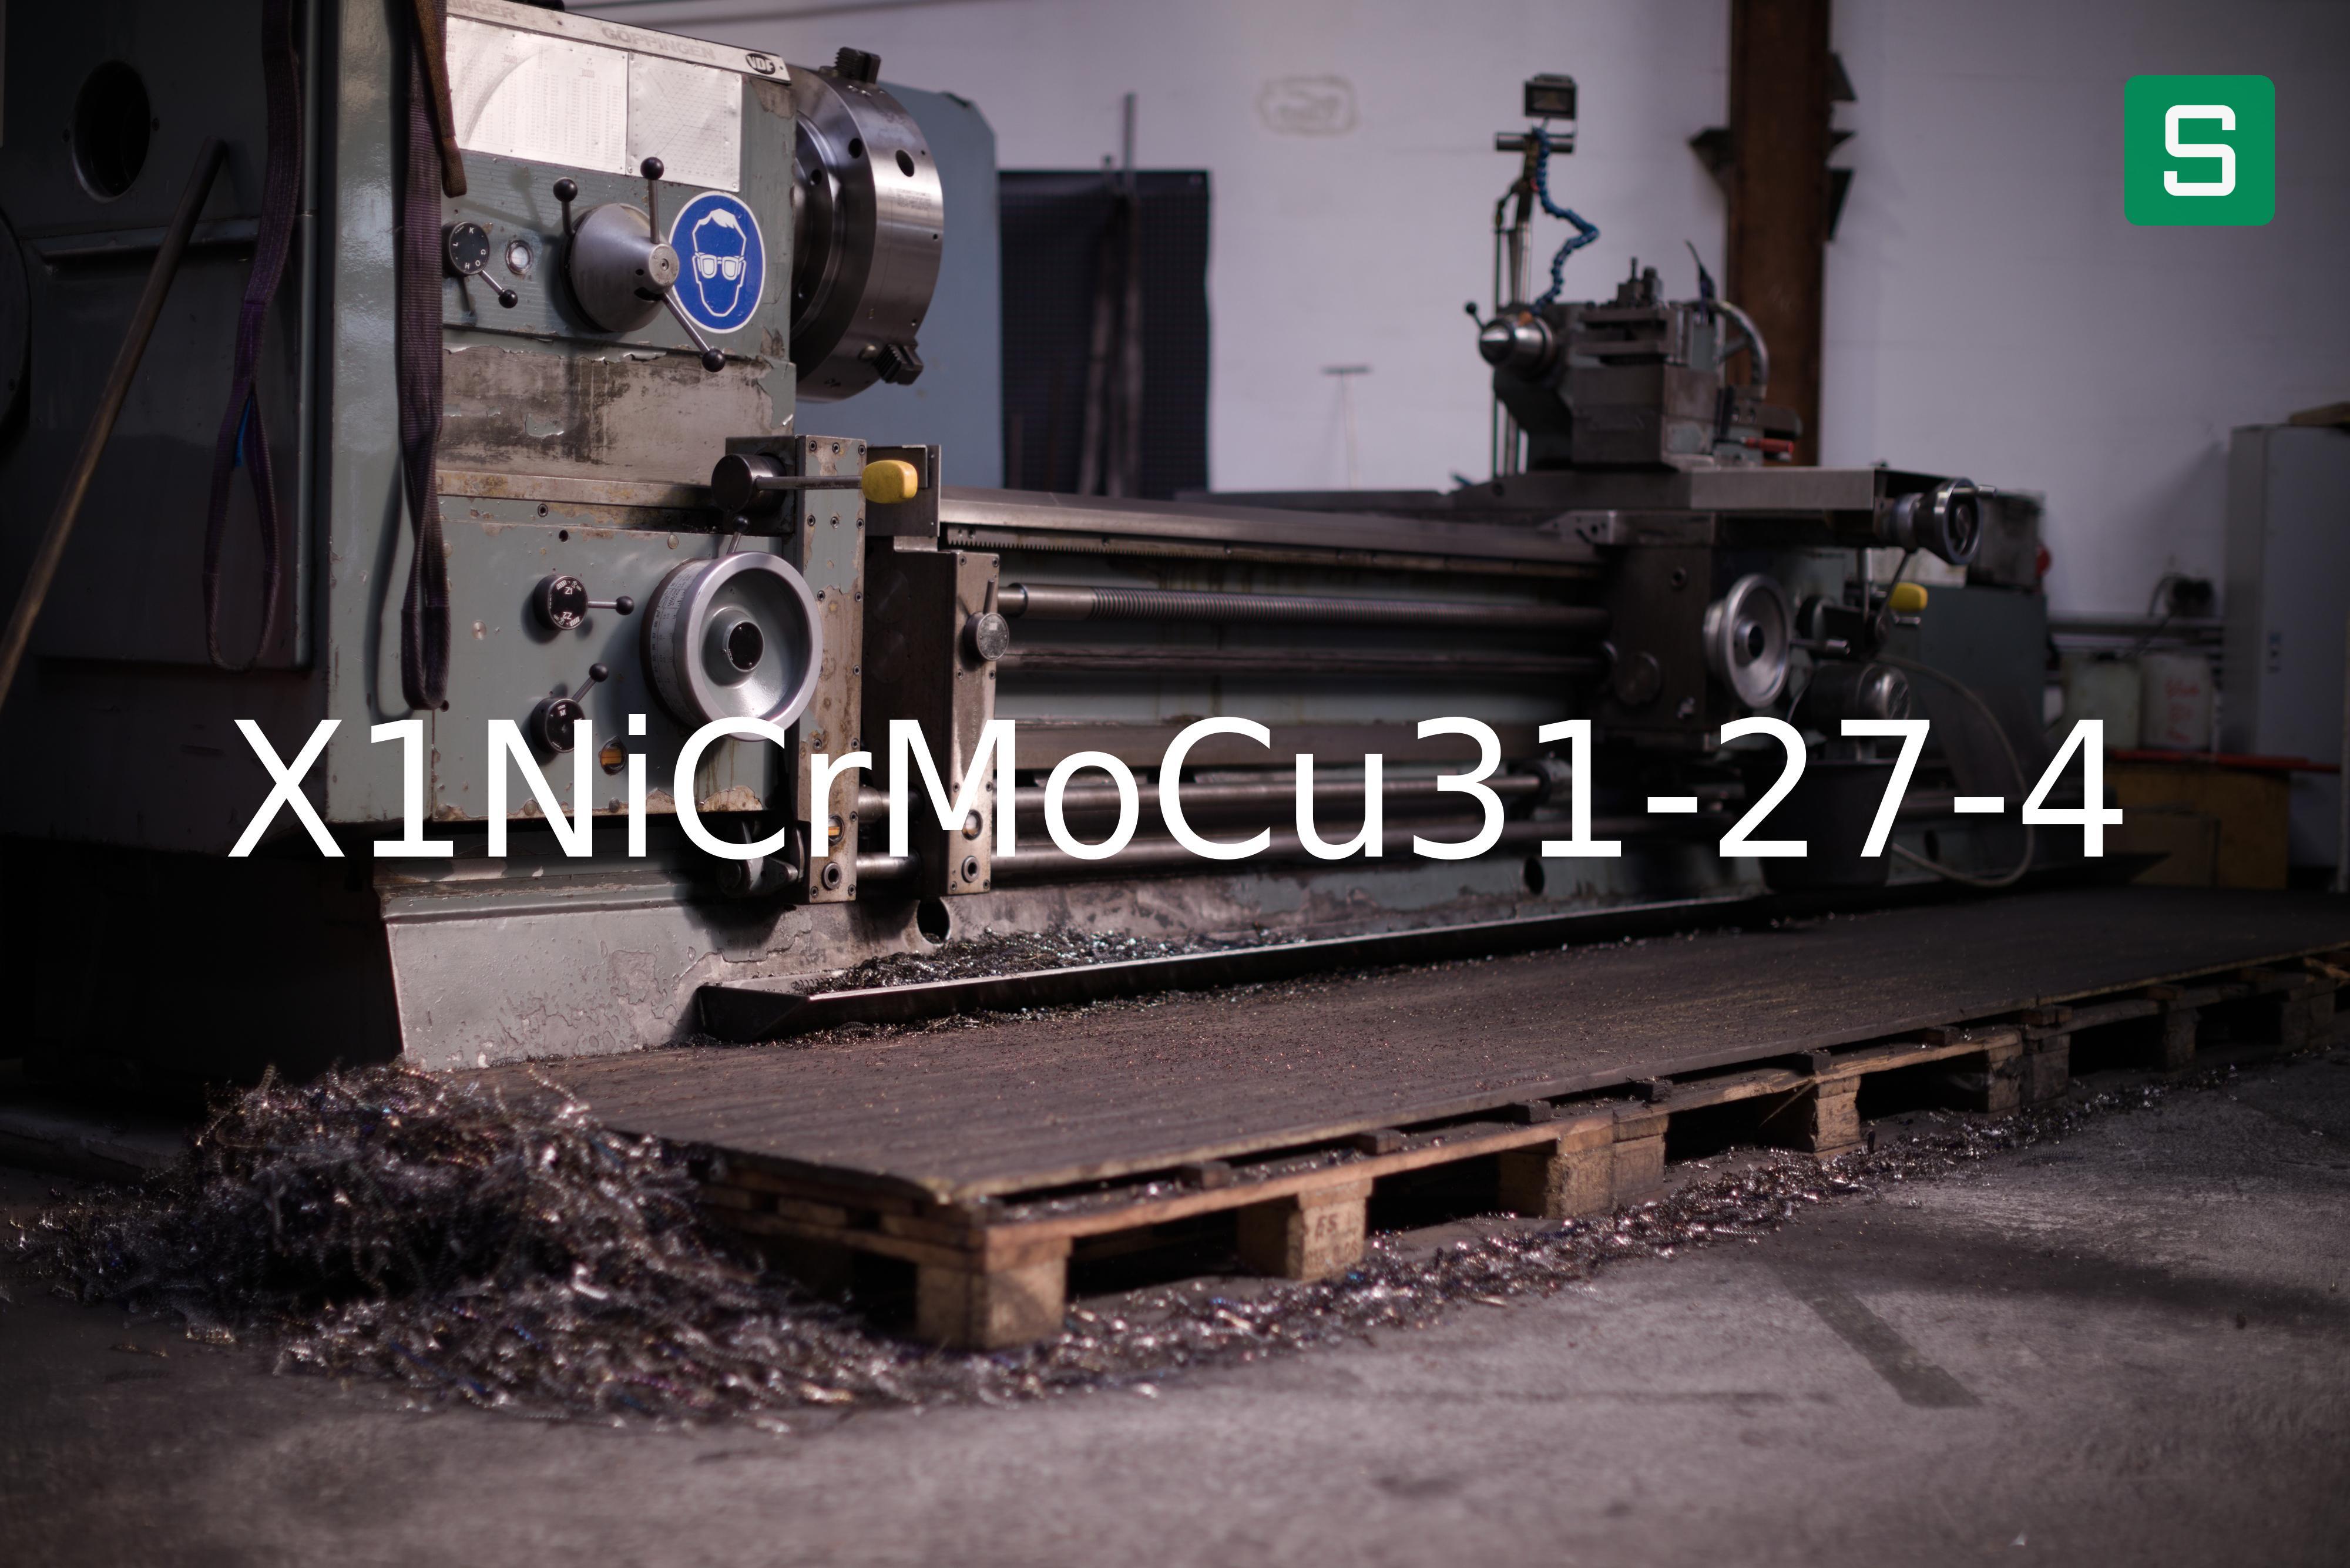 Steel Material: X1NiCrMoCu31-27-4